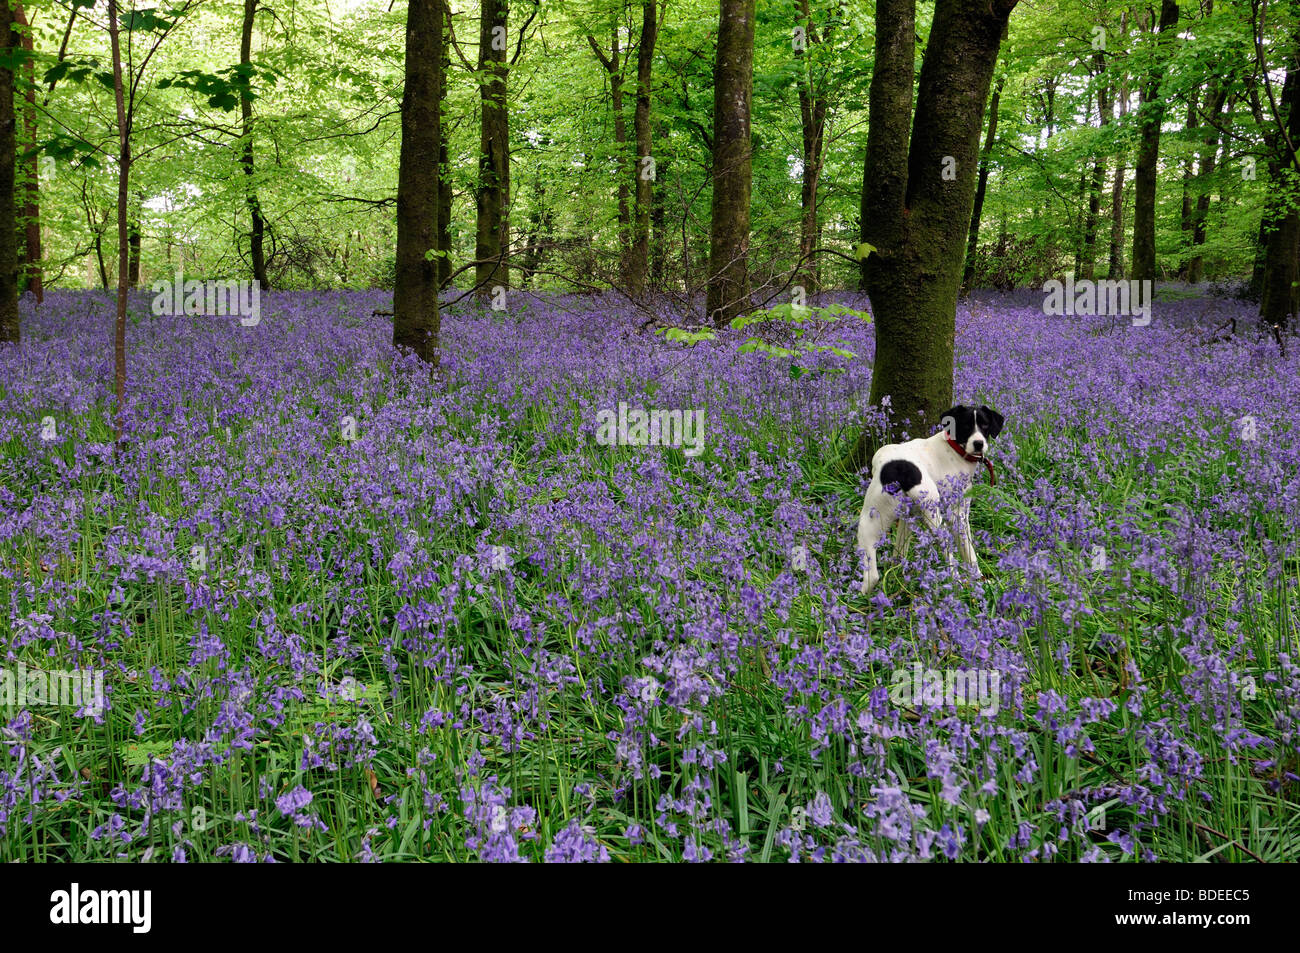 White dog Carpet of bluebells in Jenkinstown Wood County Kilkenny Ireland Stock Photo